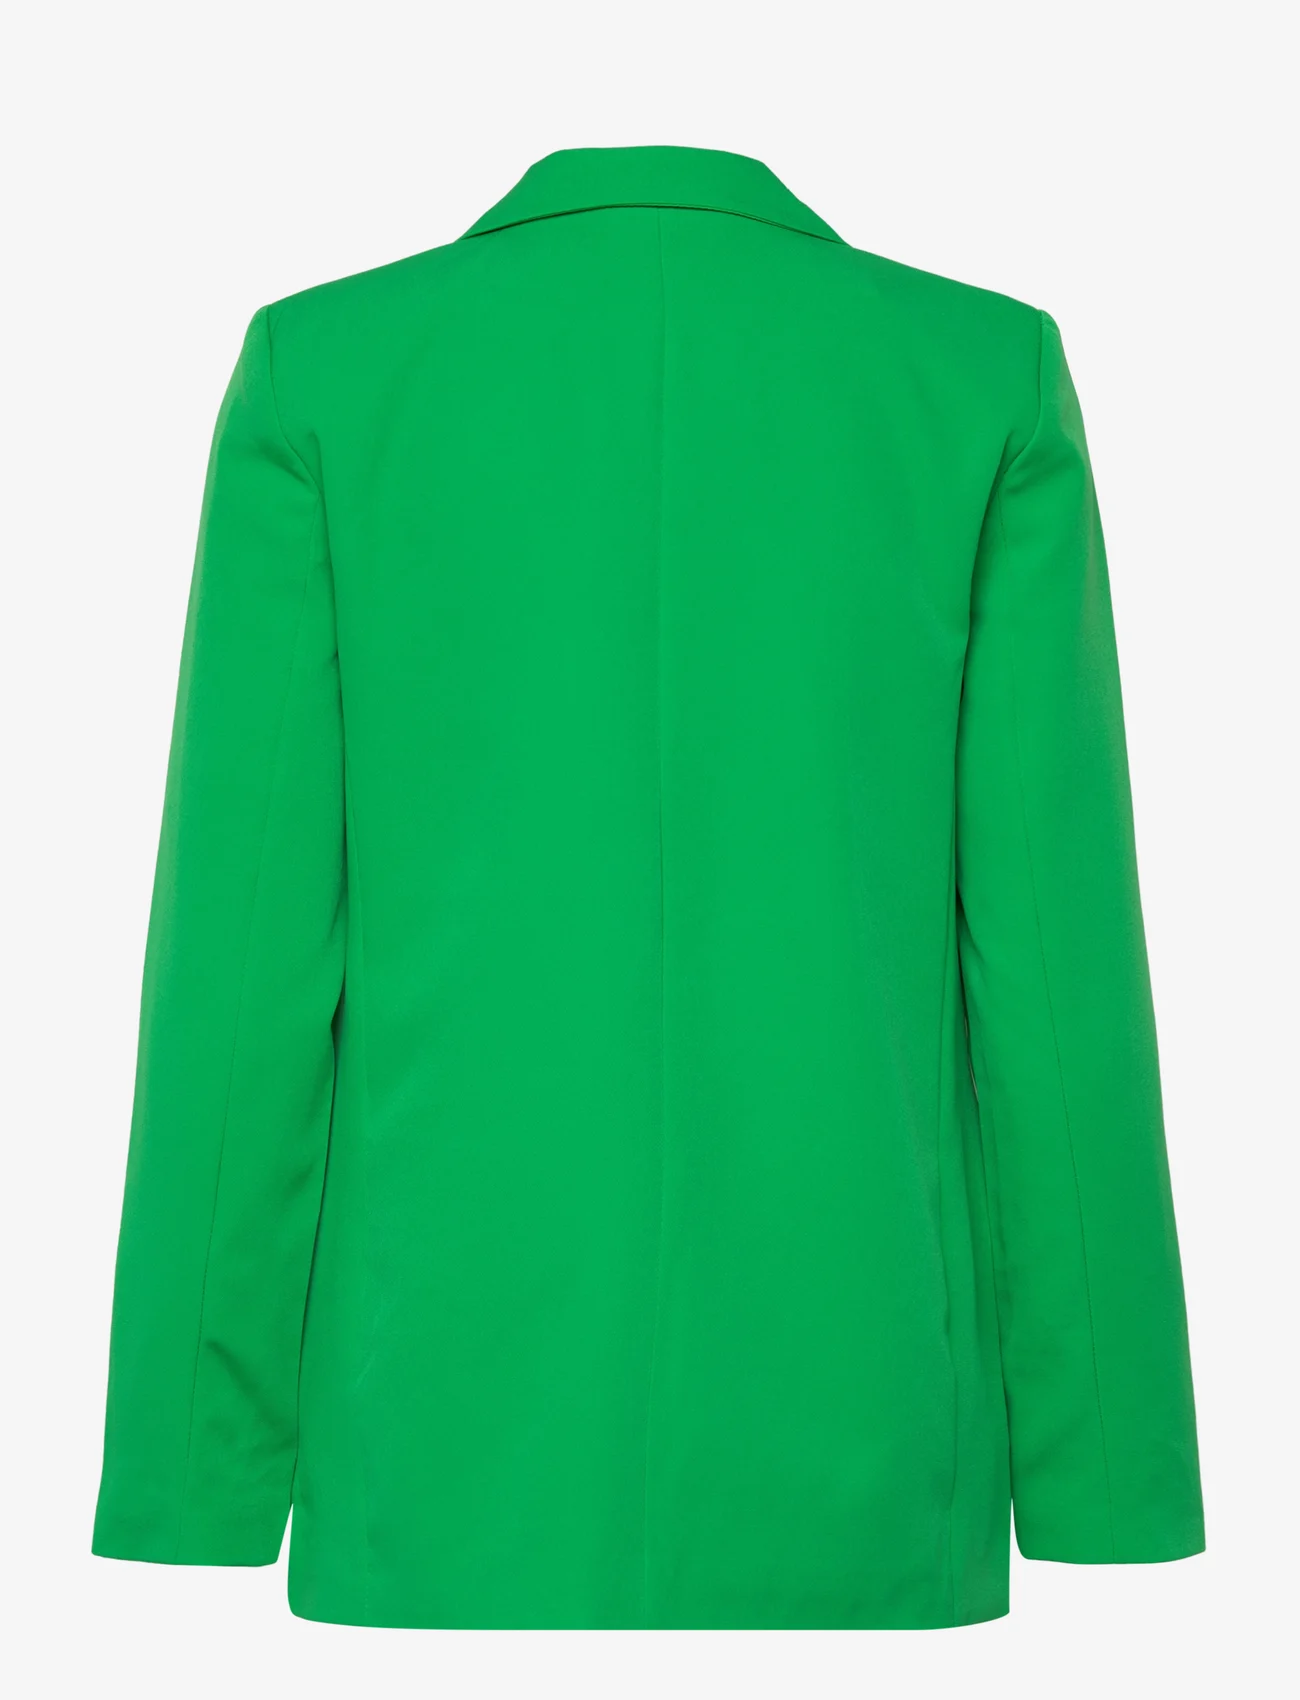 Vila - VIKAMMA LOOSE BLAZER - feestelijke kleding voor outlet-prijzen - bright green - 1